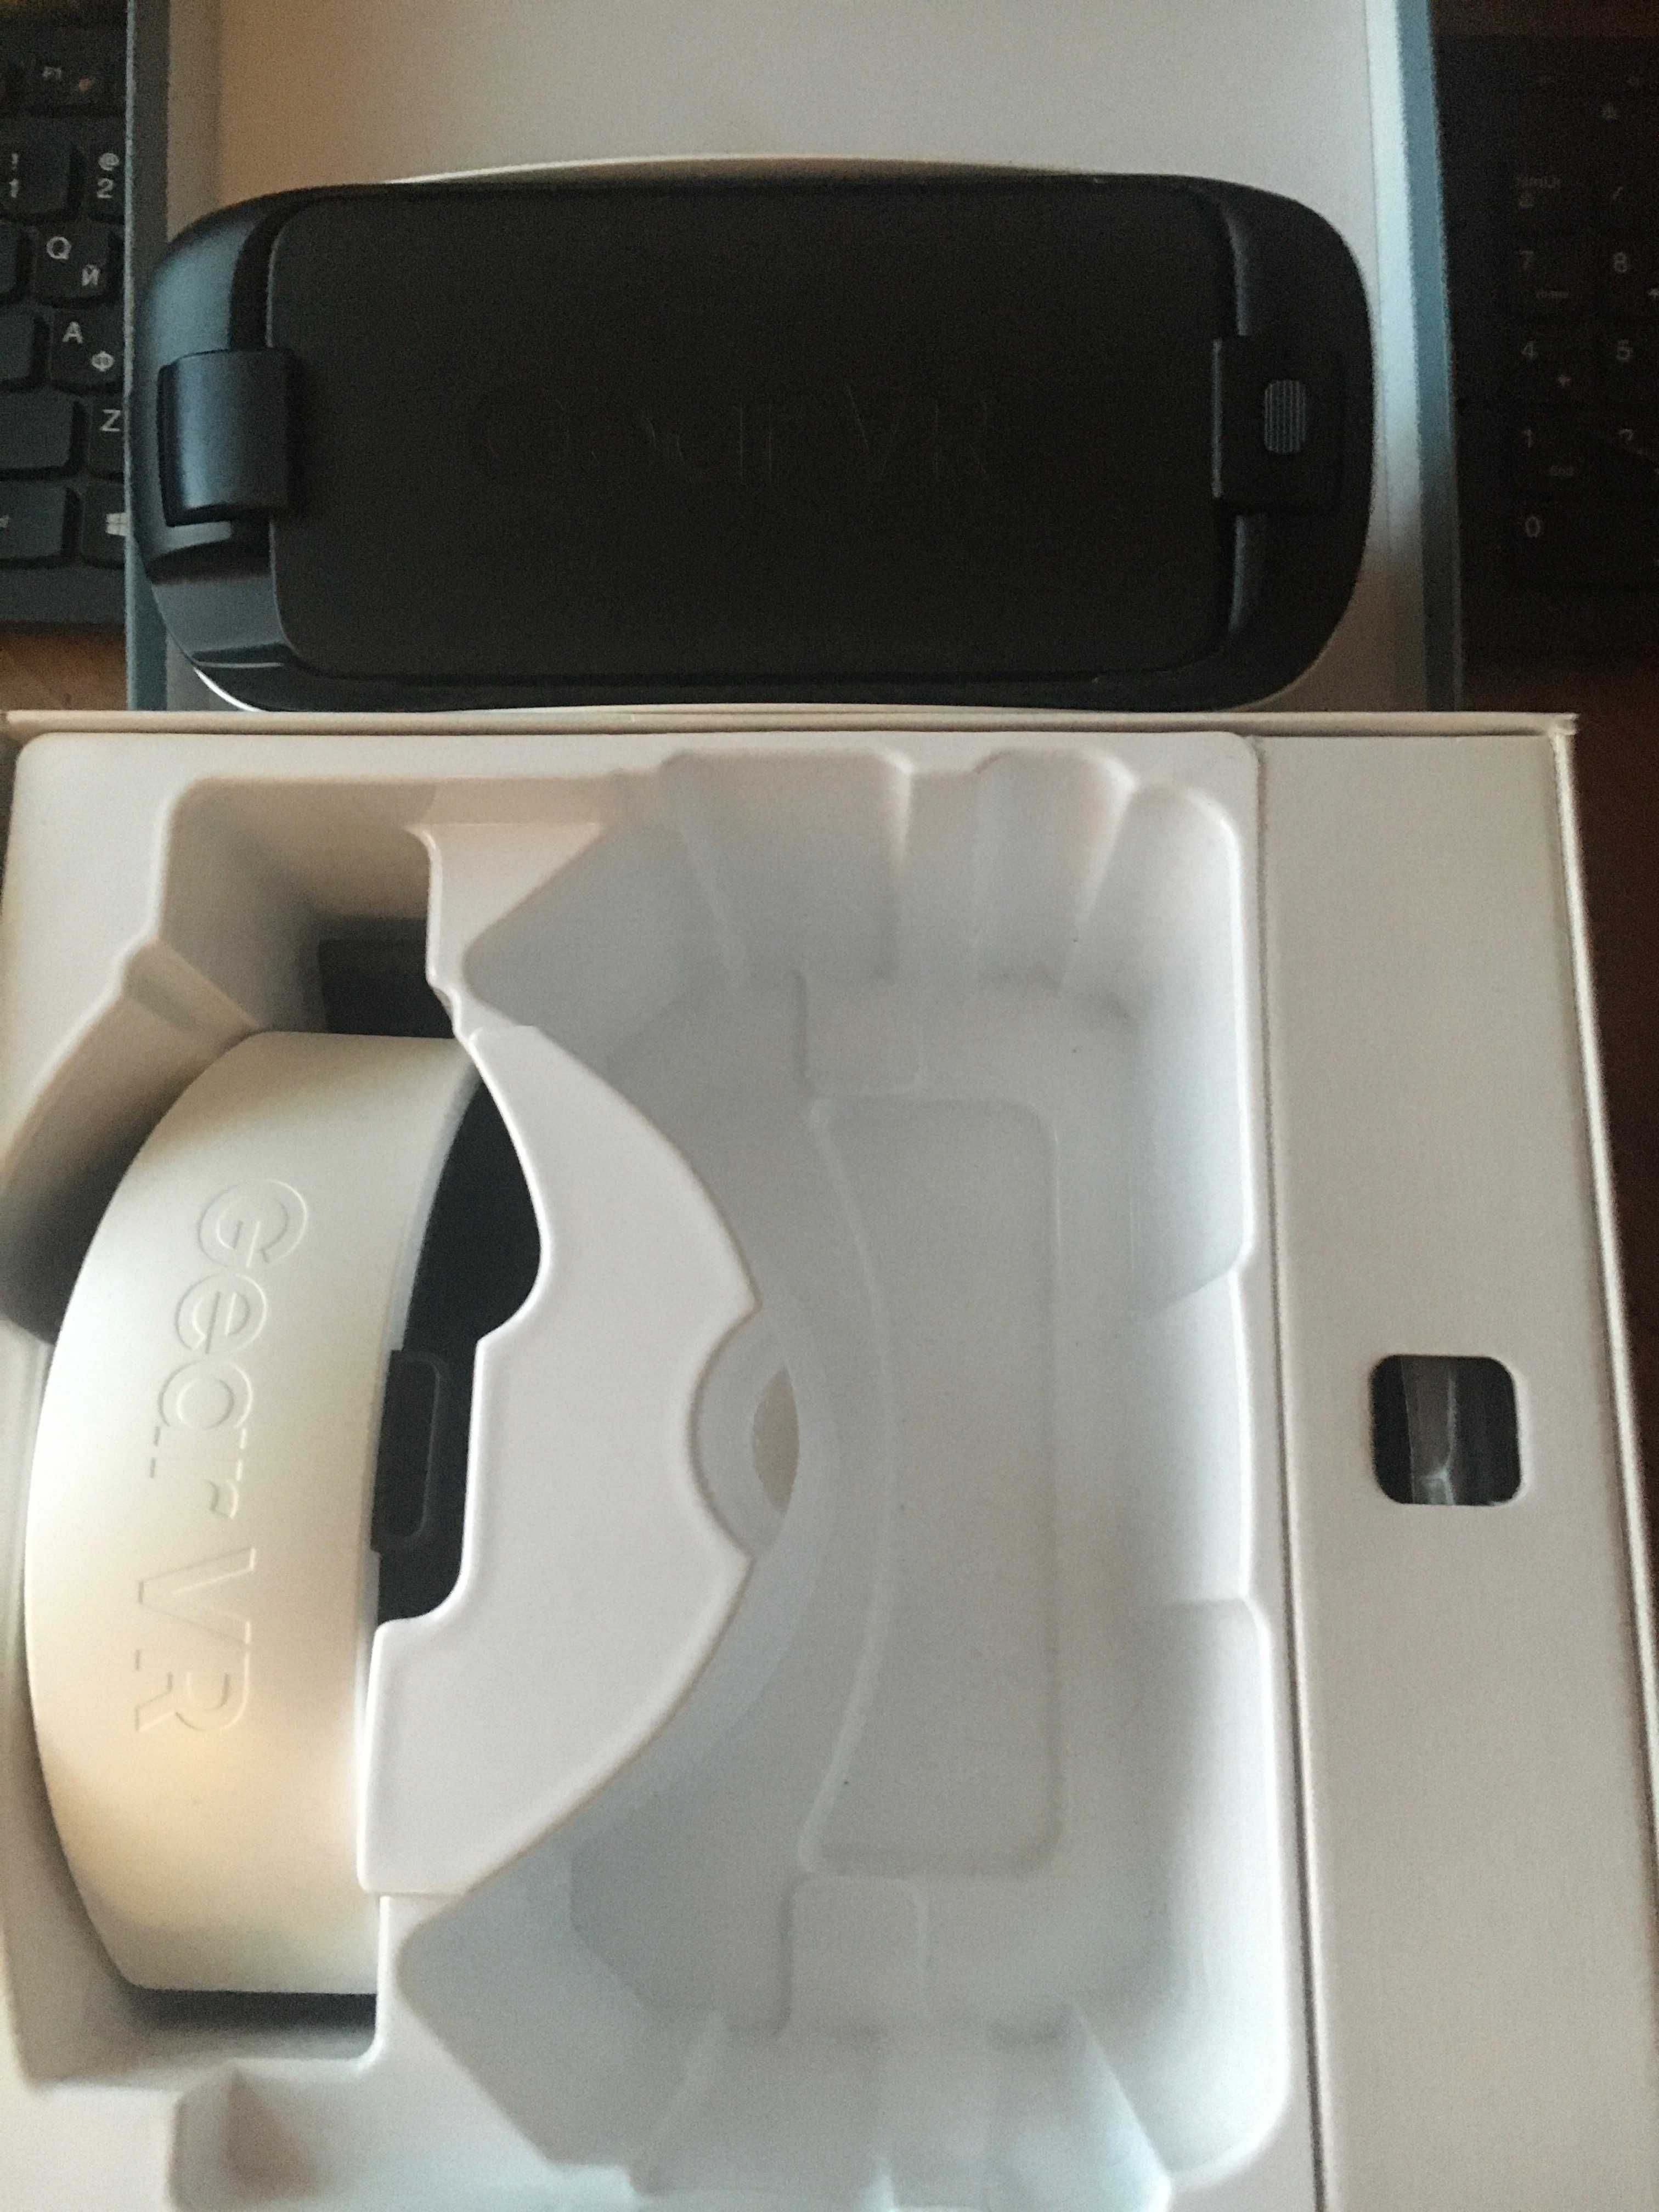 Очки ВР Samsung Gear VR2 Black